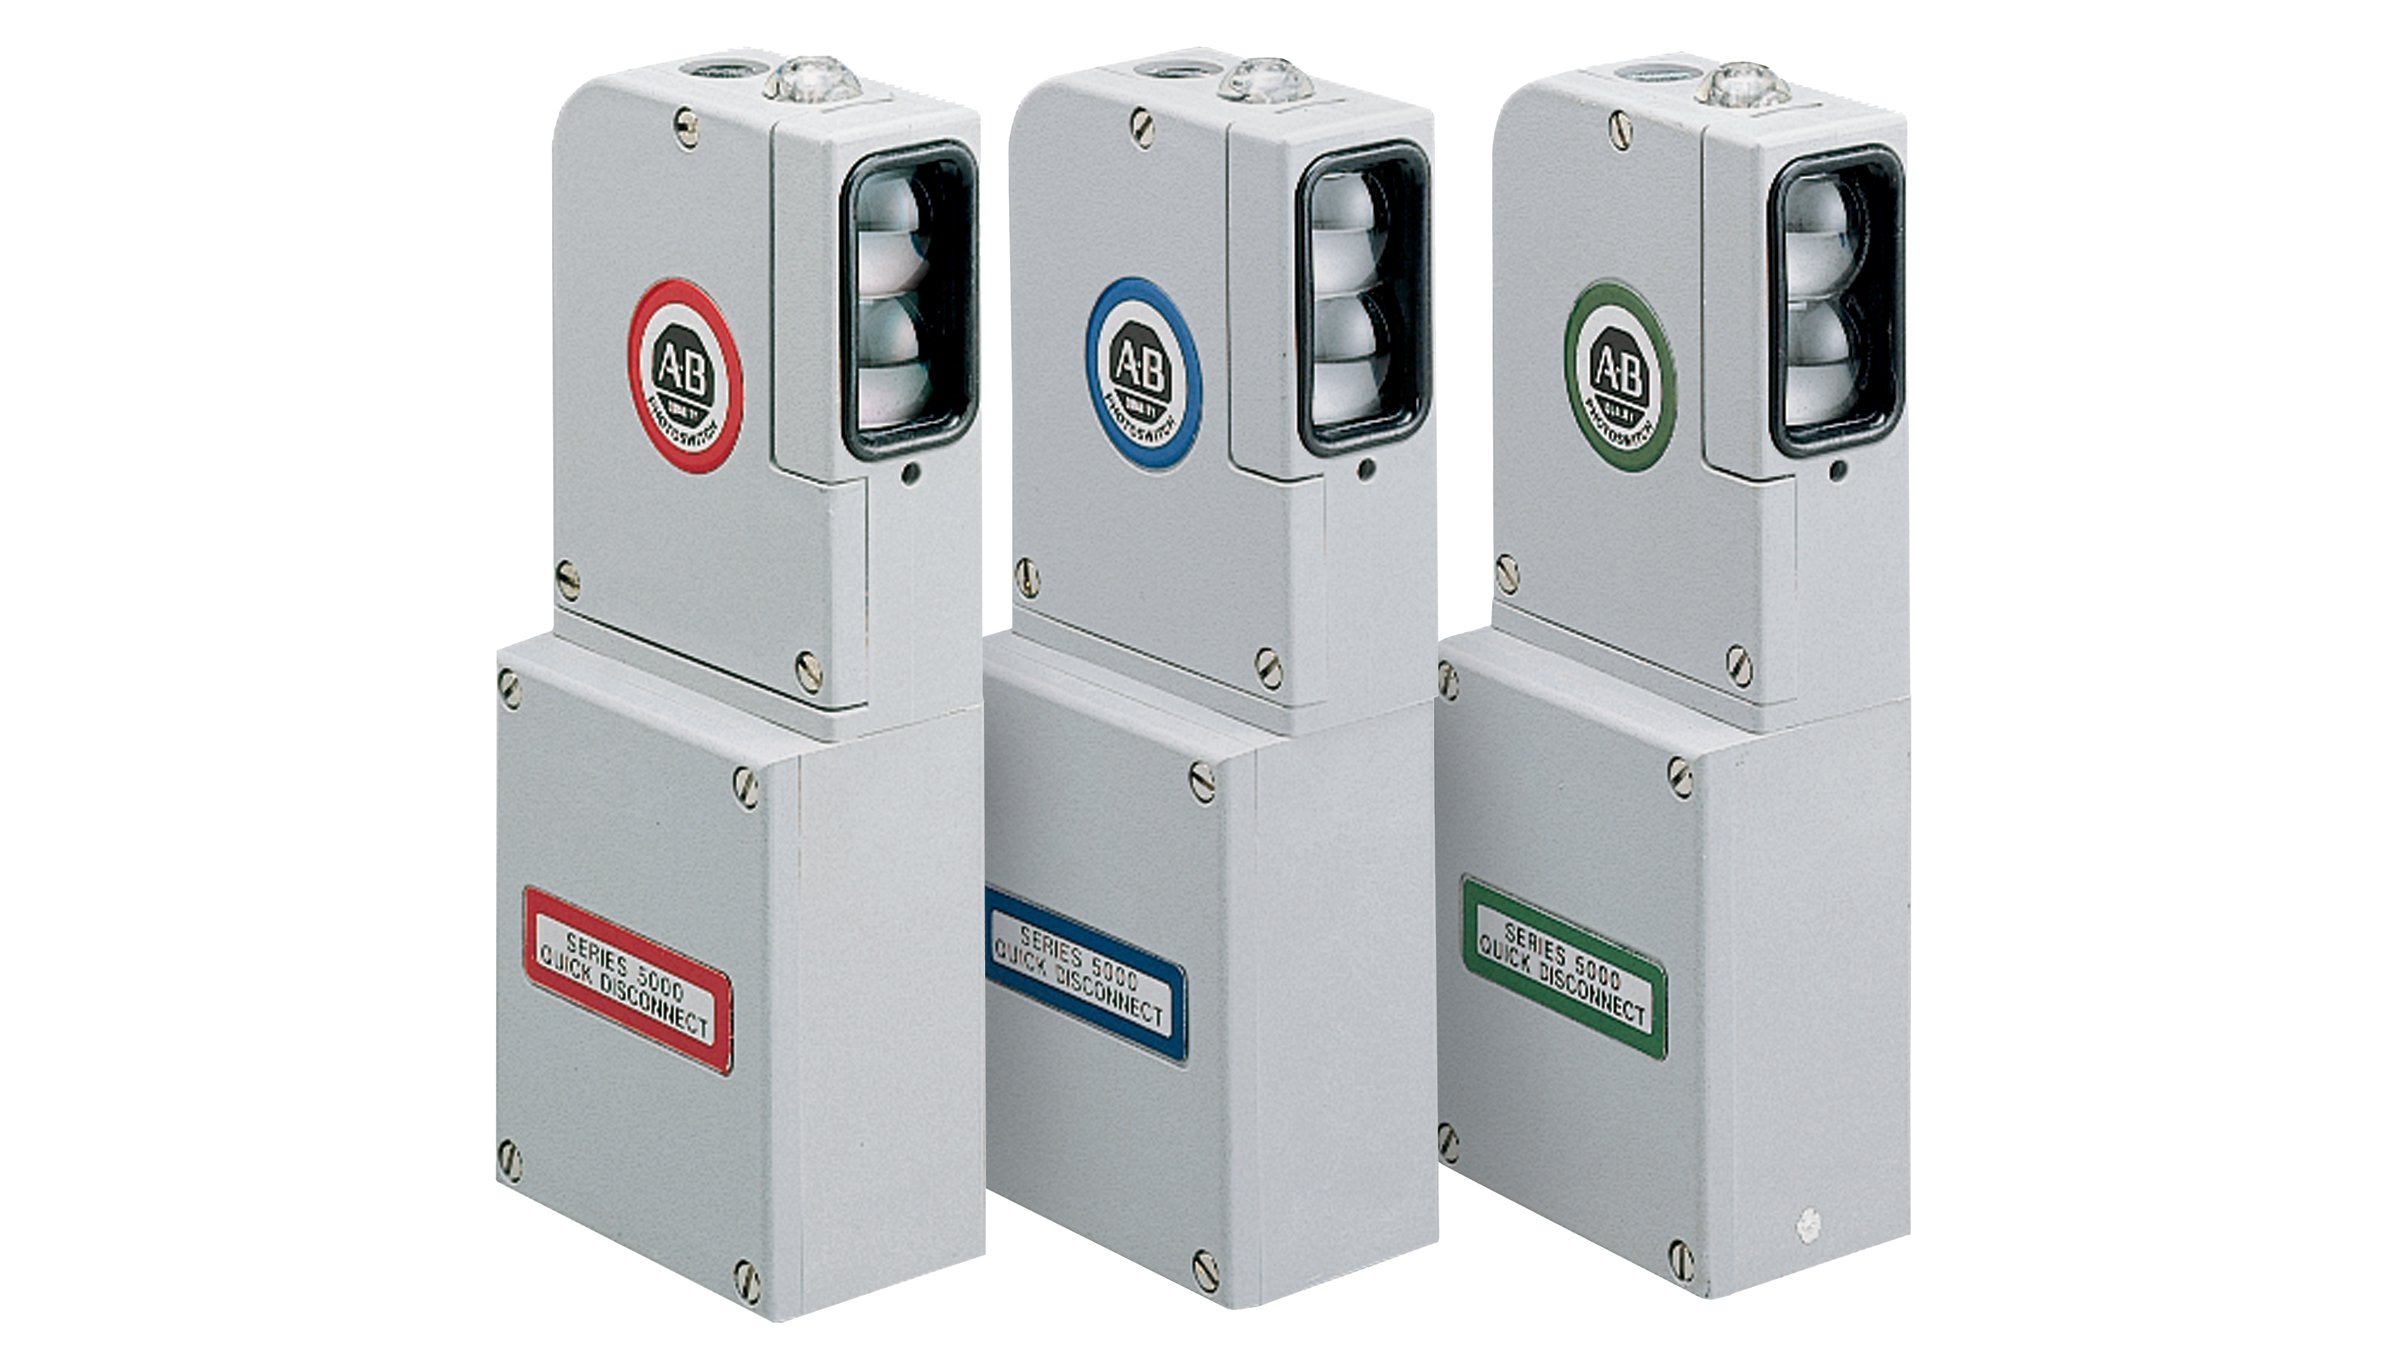 Tres sensores rectangulares grises altos Allen-Bradley con etiquetas rojas, azules y verdes.